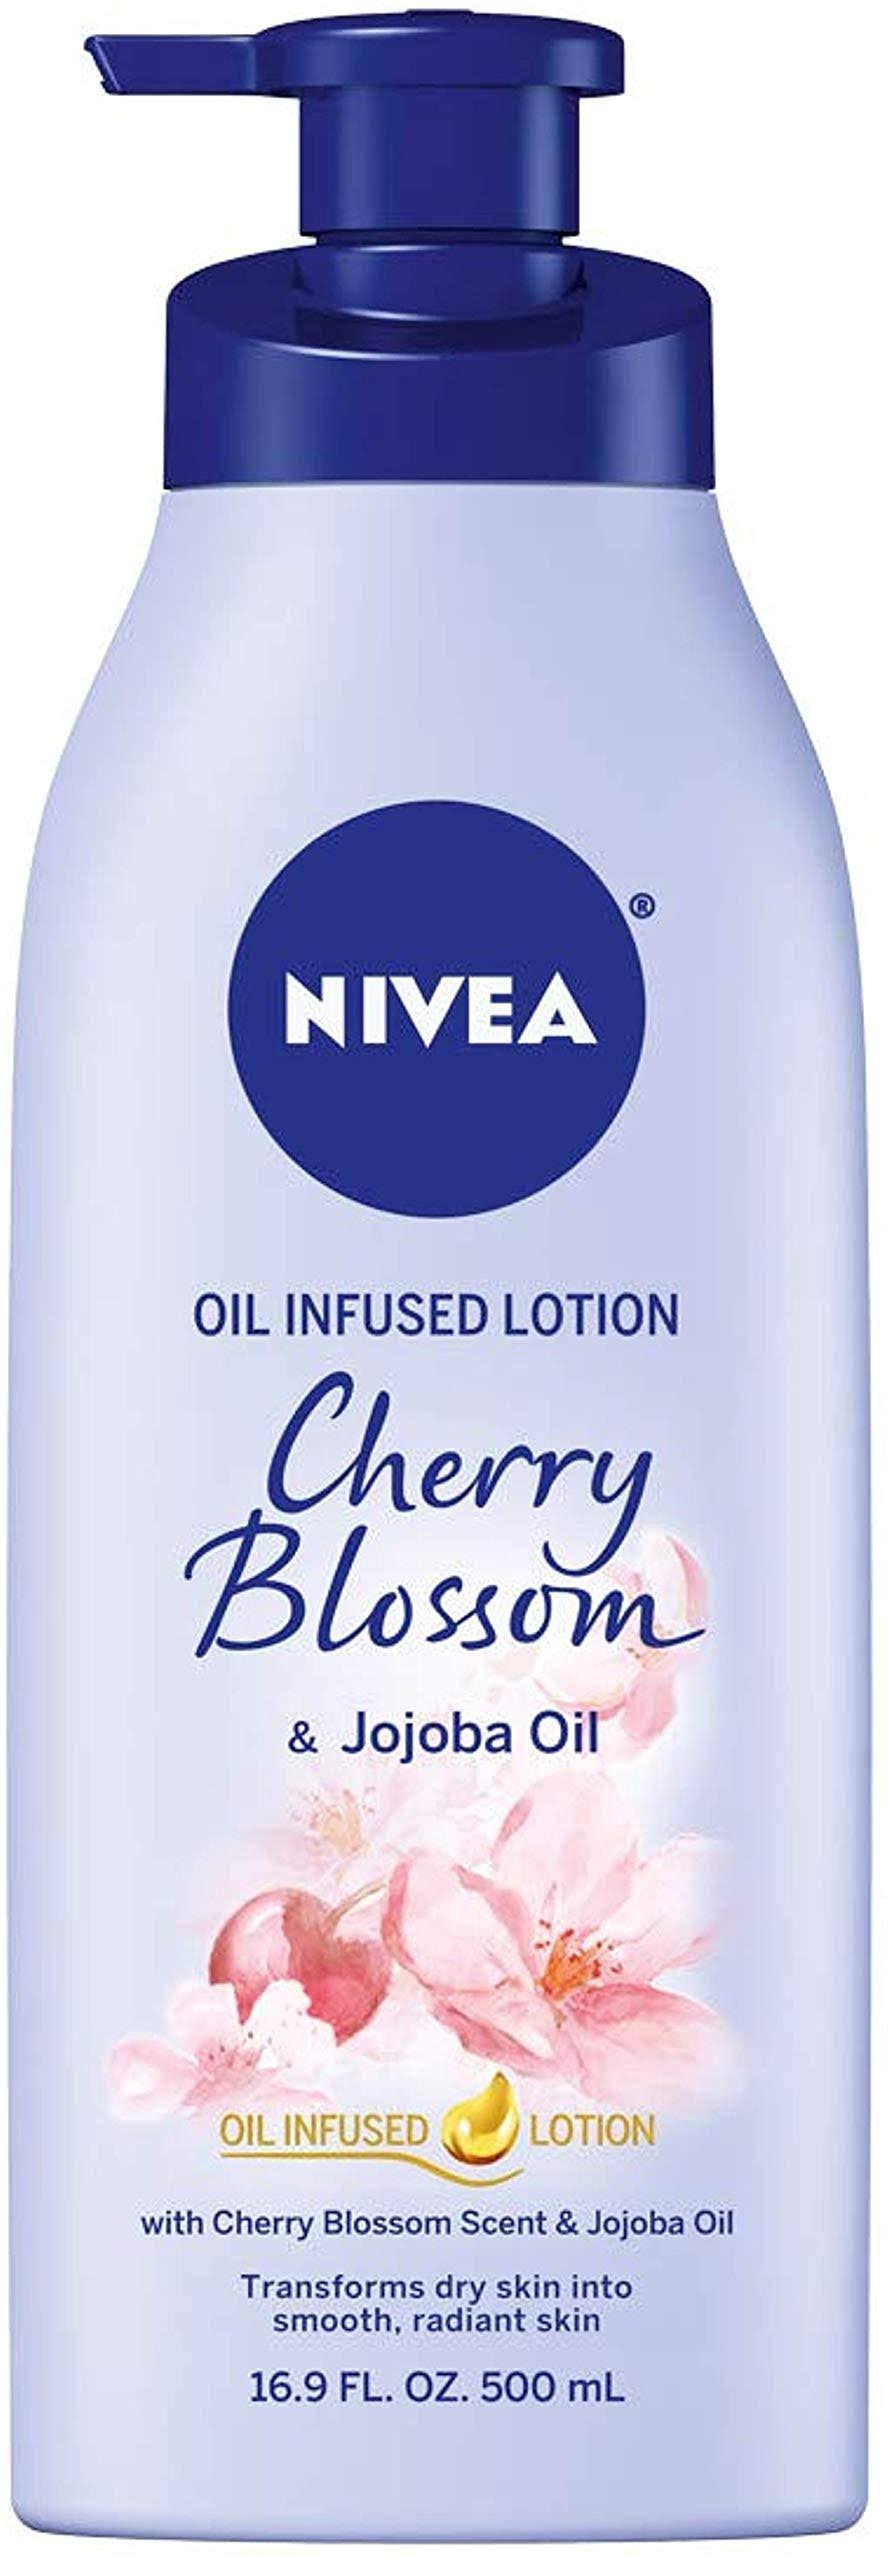 Nivea Oil Infused Lotion - Cherry Blossom and Jojoba Oil, 16.9 fl oz